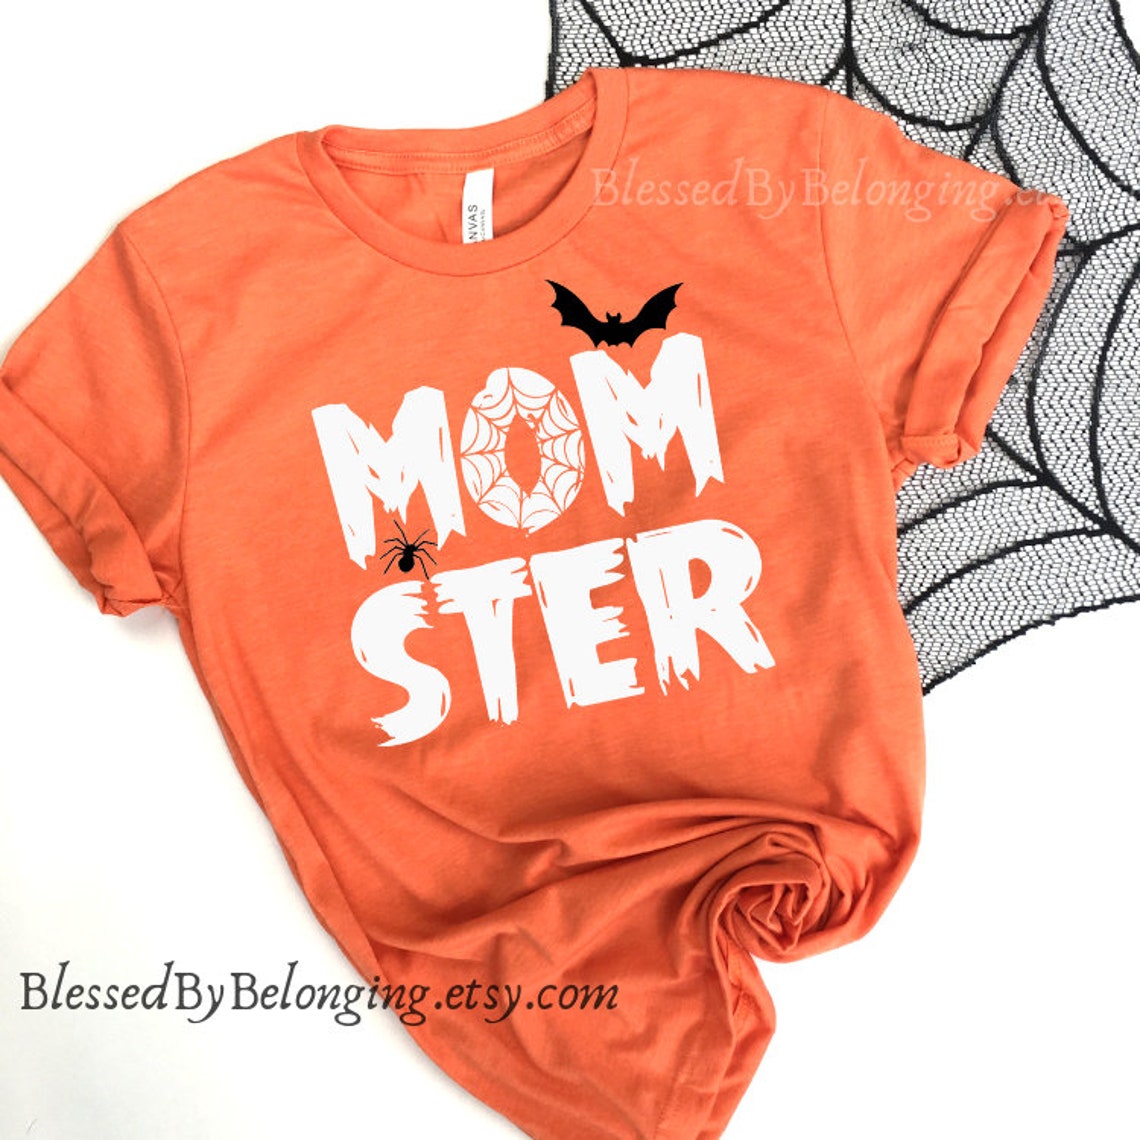 Momster Halloween T-Shirt - MOM Ster Halloween Shirt- Women's Halloween Shirt- Mom Halloween Shirt- Funny Halloween Shirt Women- Fall Shirt